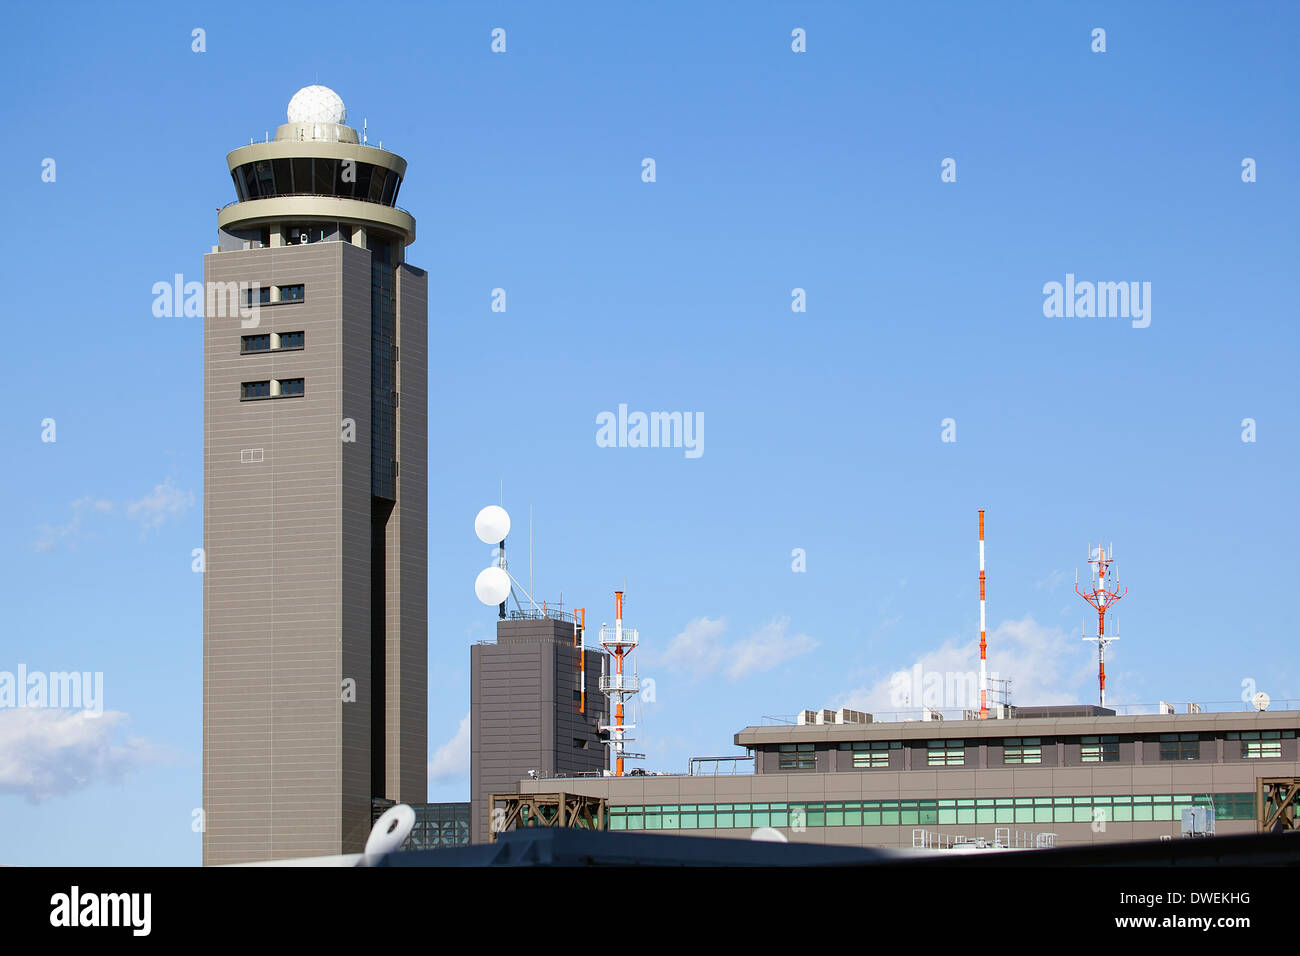 Tokyo Narita Airport tour de contrôle contre le ciel bleu Banque D'Images